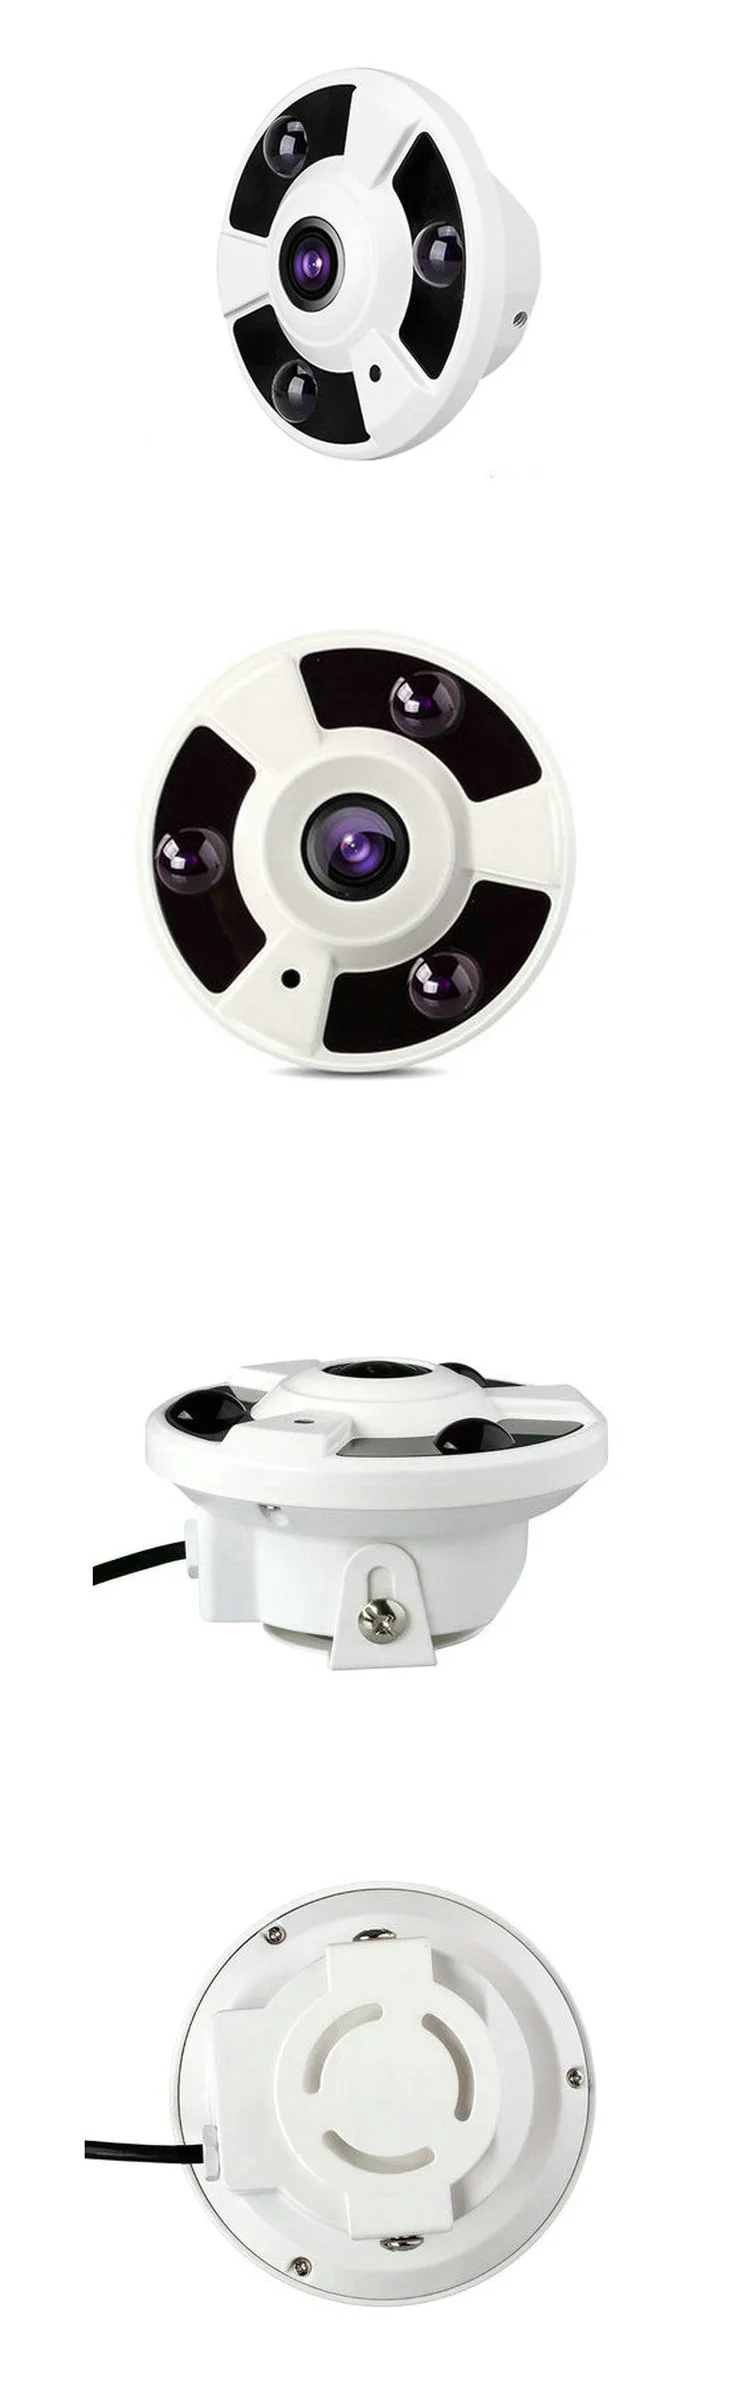 2MP 1080P Fisheye 360degree Panoramic AHD Flying Saucer CCTV Security Surveillance Analogue Camera